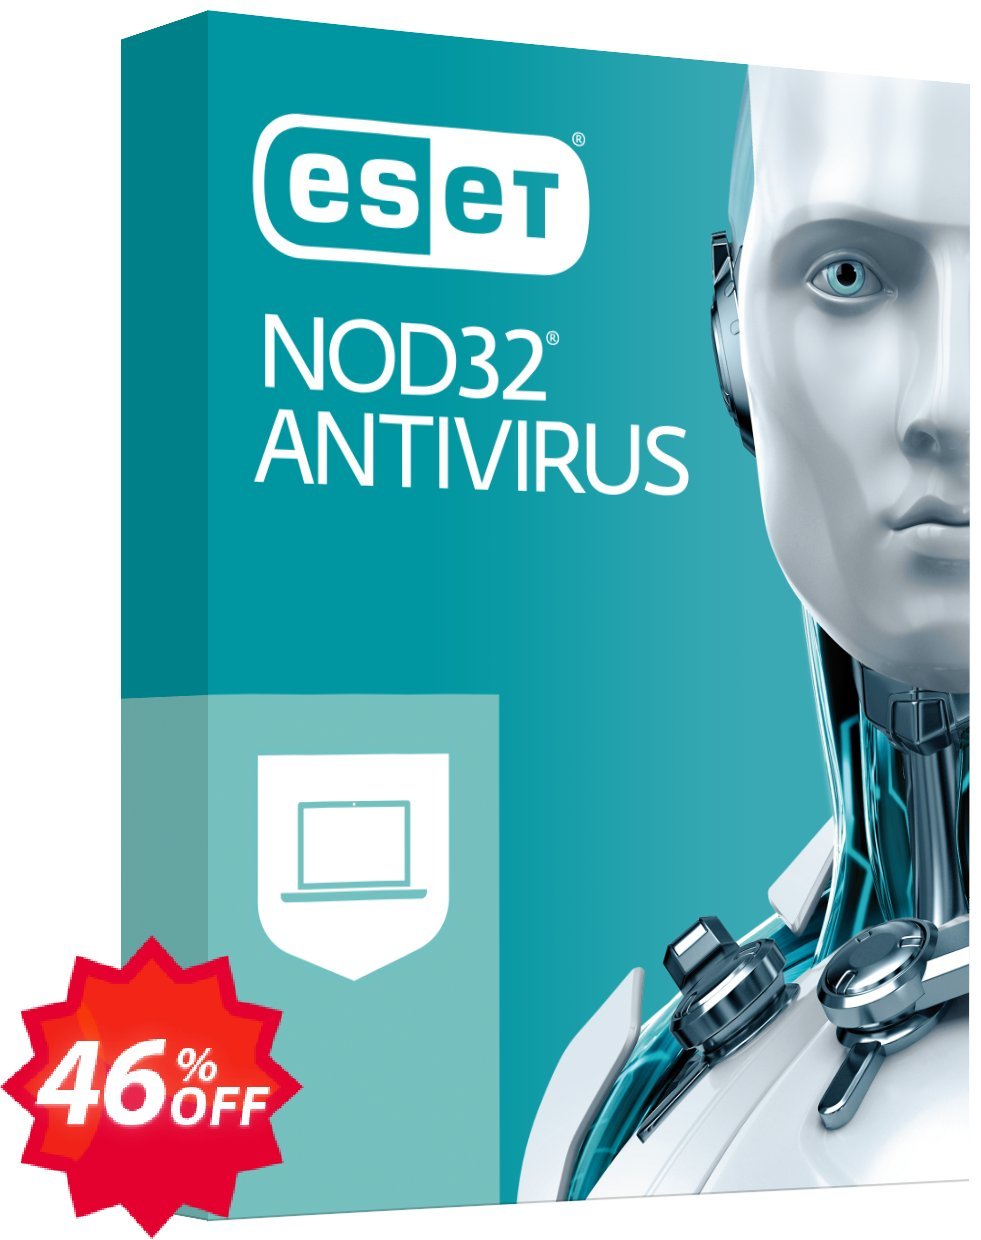 ESET NOD32 Antivirus - Renew 2 Years 4 Devices Coupon code 46% discount 